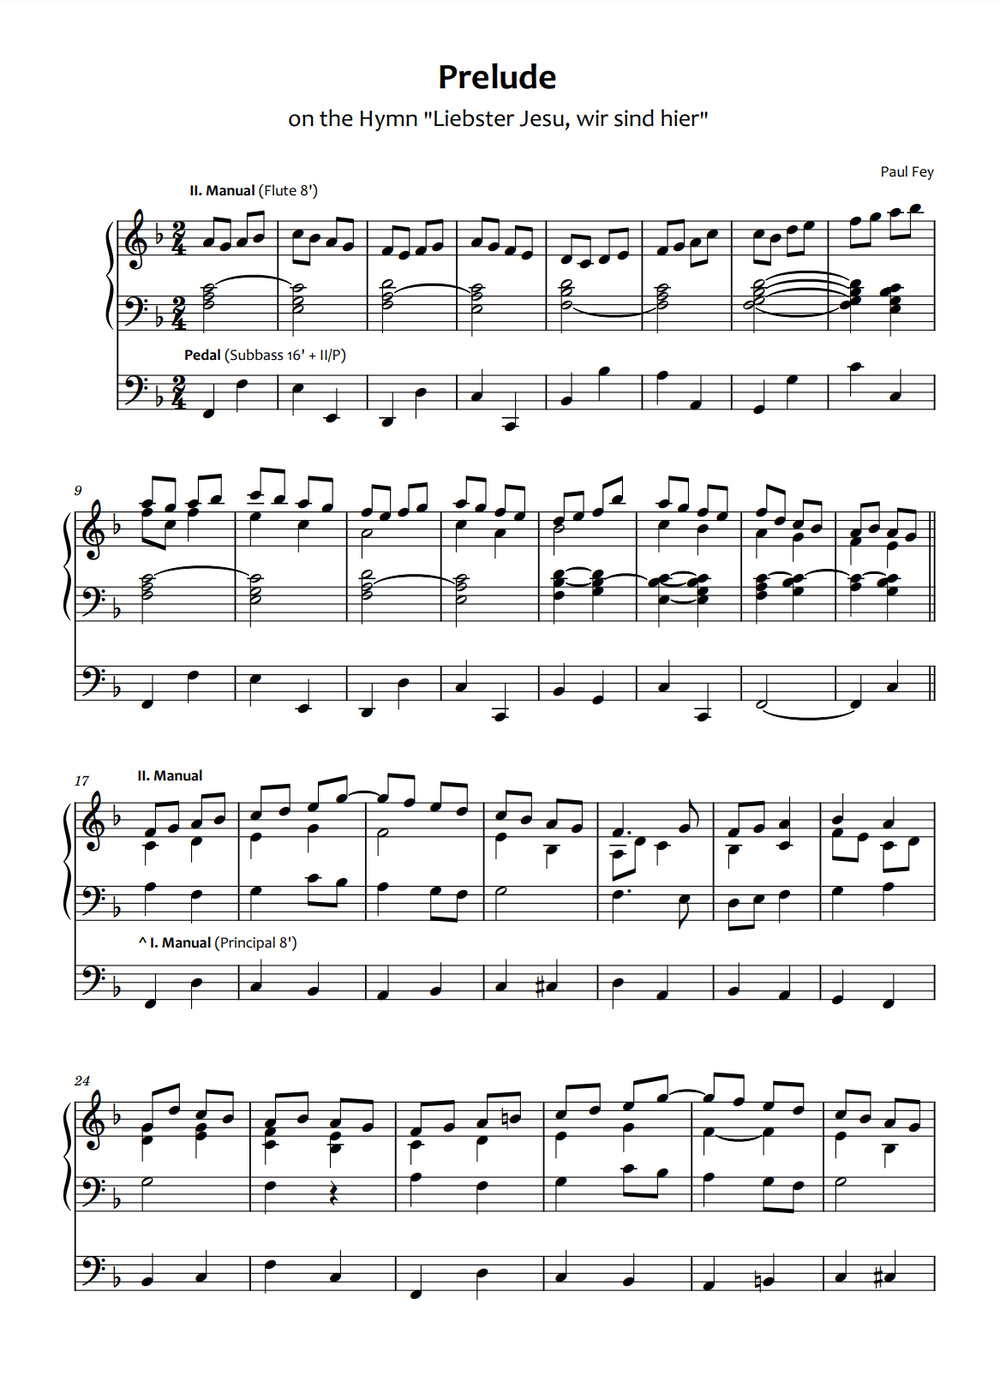 Prelude on "Liebster Jesu" (Sheet Music) - Music for Pipe Organ by Paul Fey